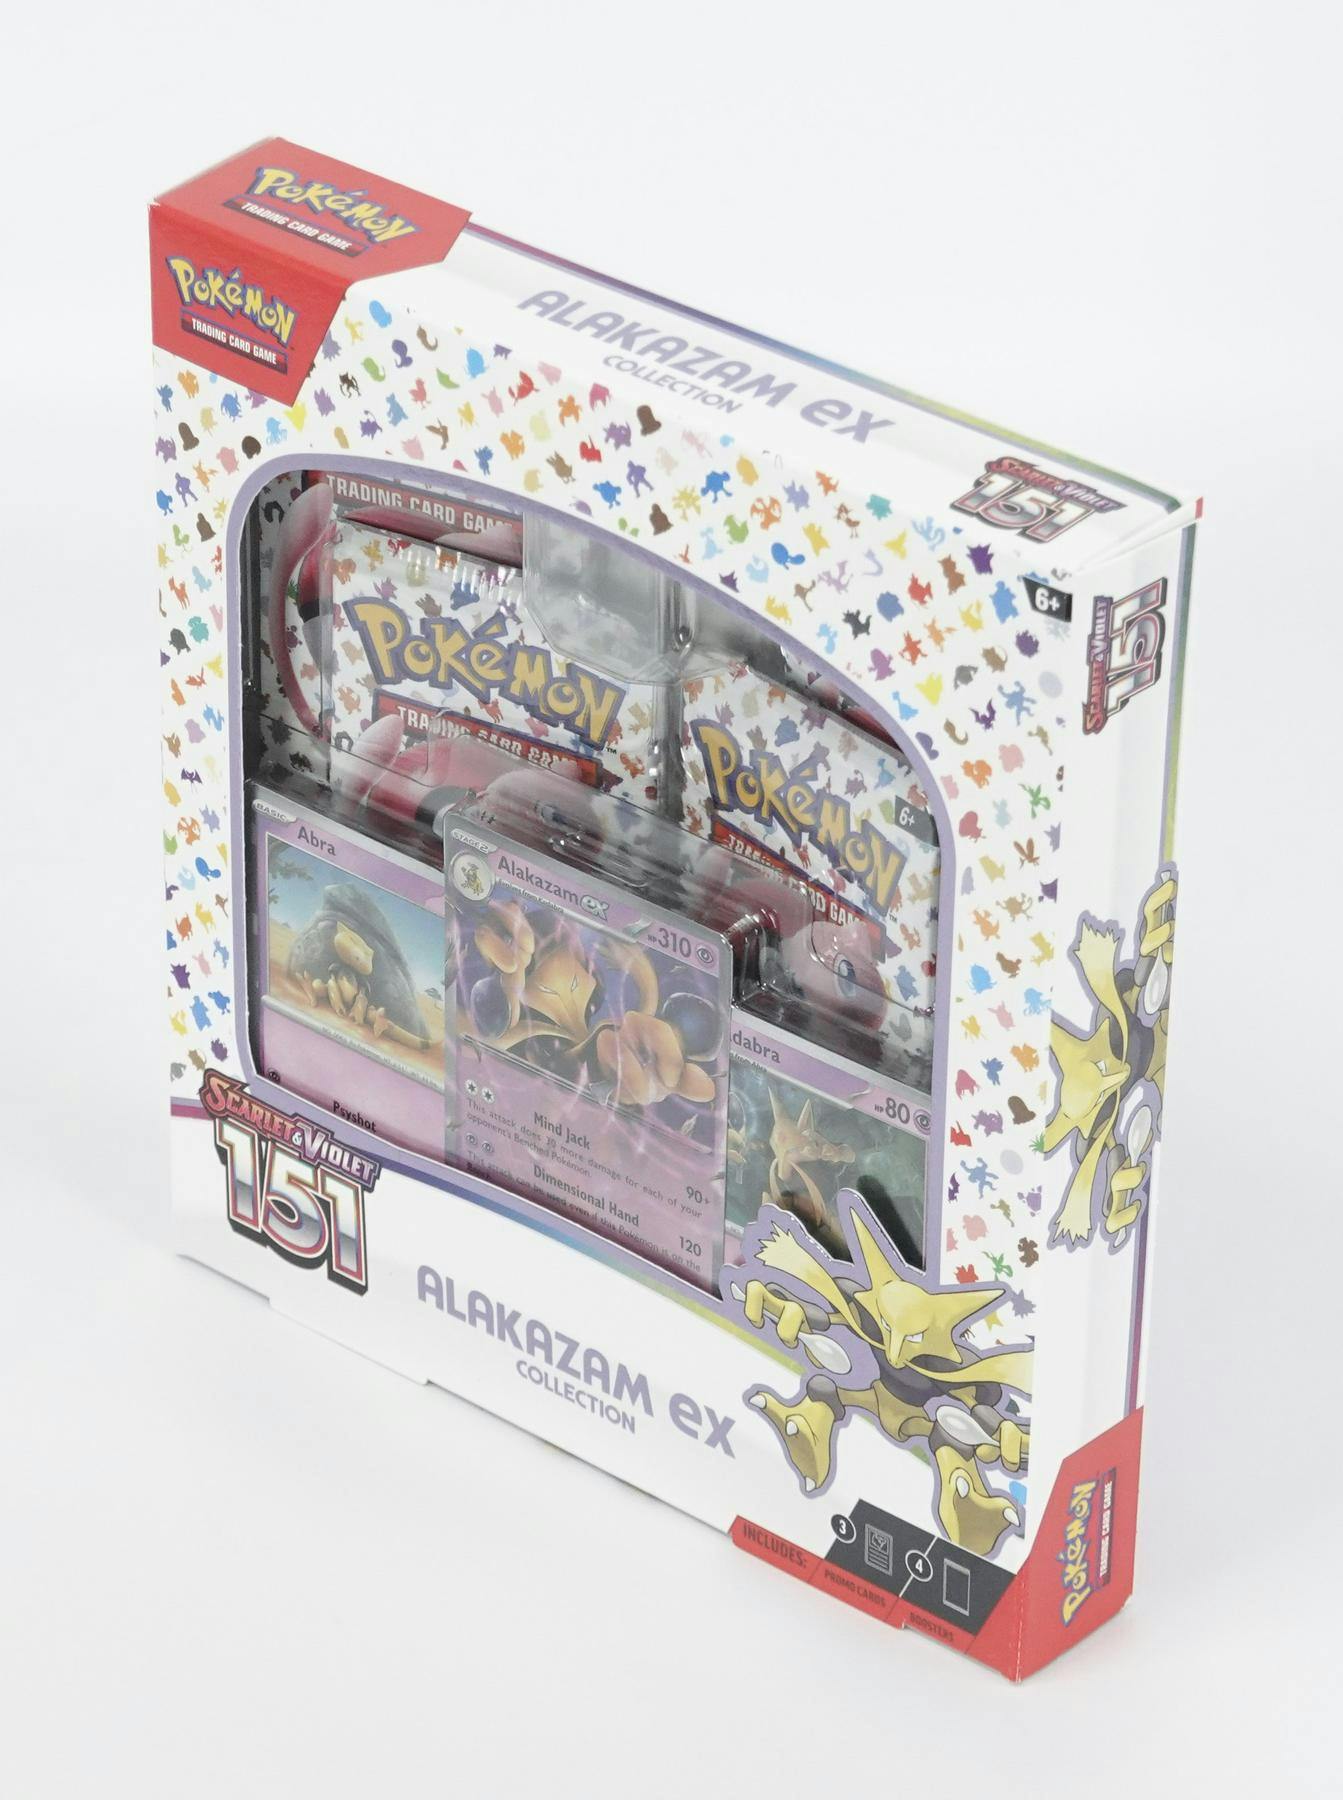 NEW ALAKAZAM EX DECK from the Pokemon TCG set 151! 